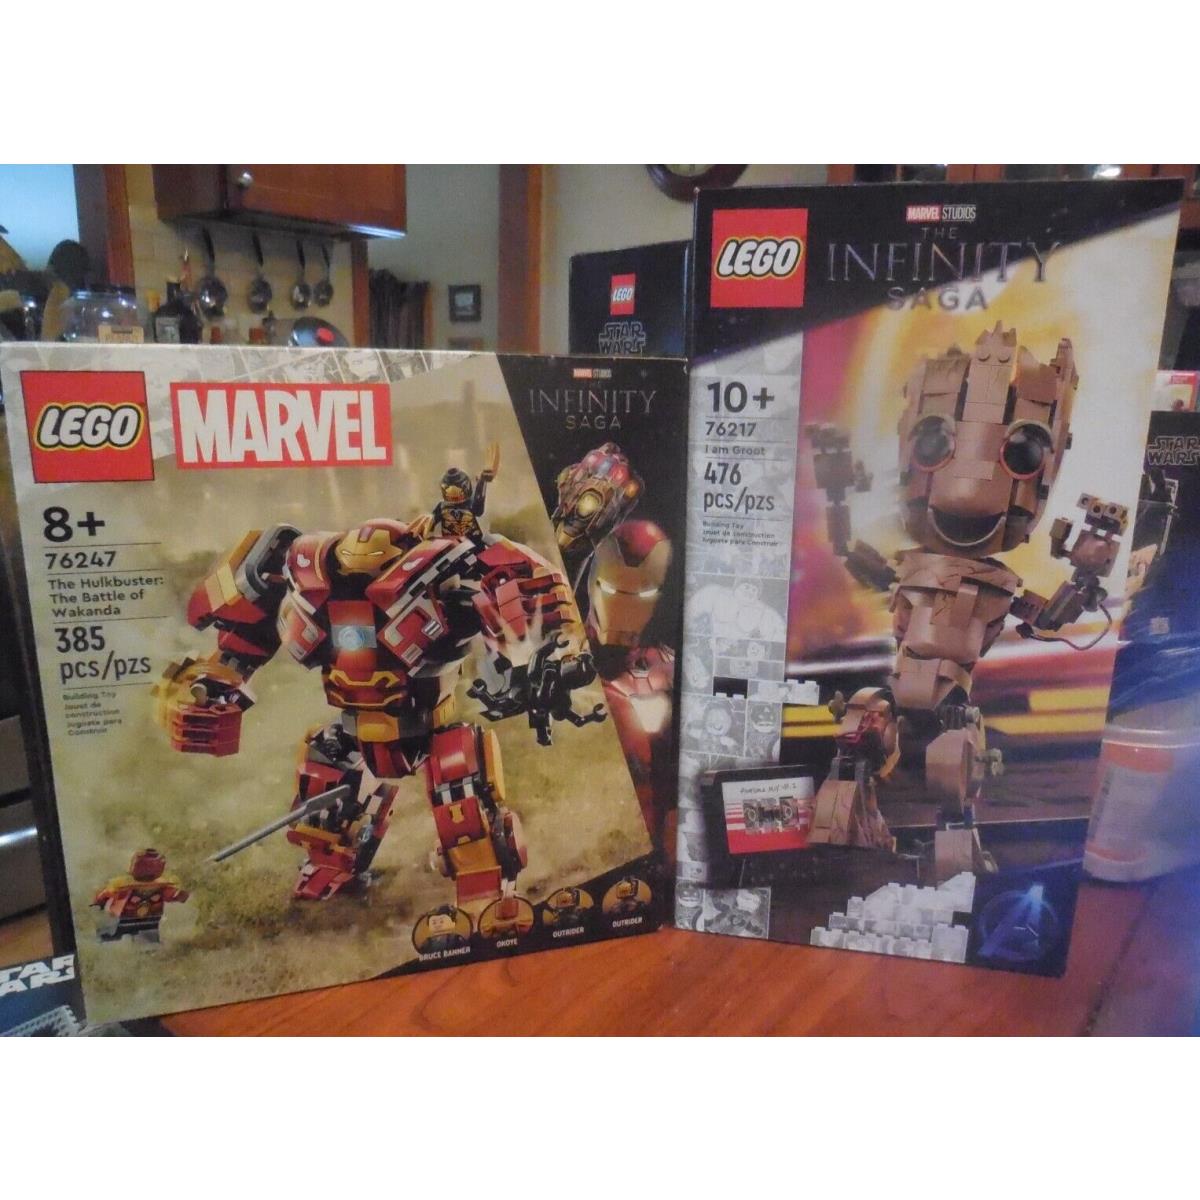 2-LEGO Marvel Infinity I Am Groot The Hulkbuster 76217 76247